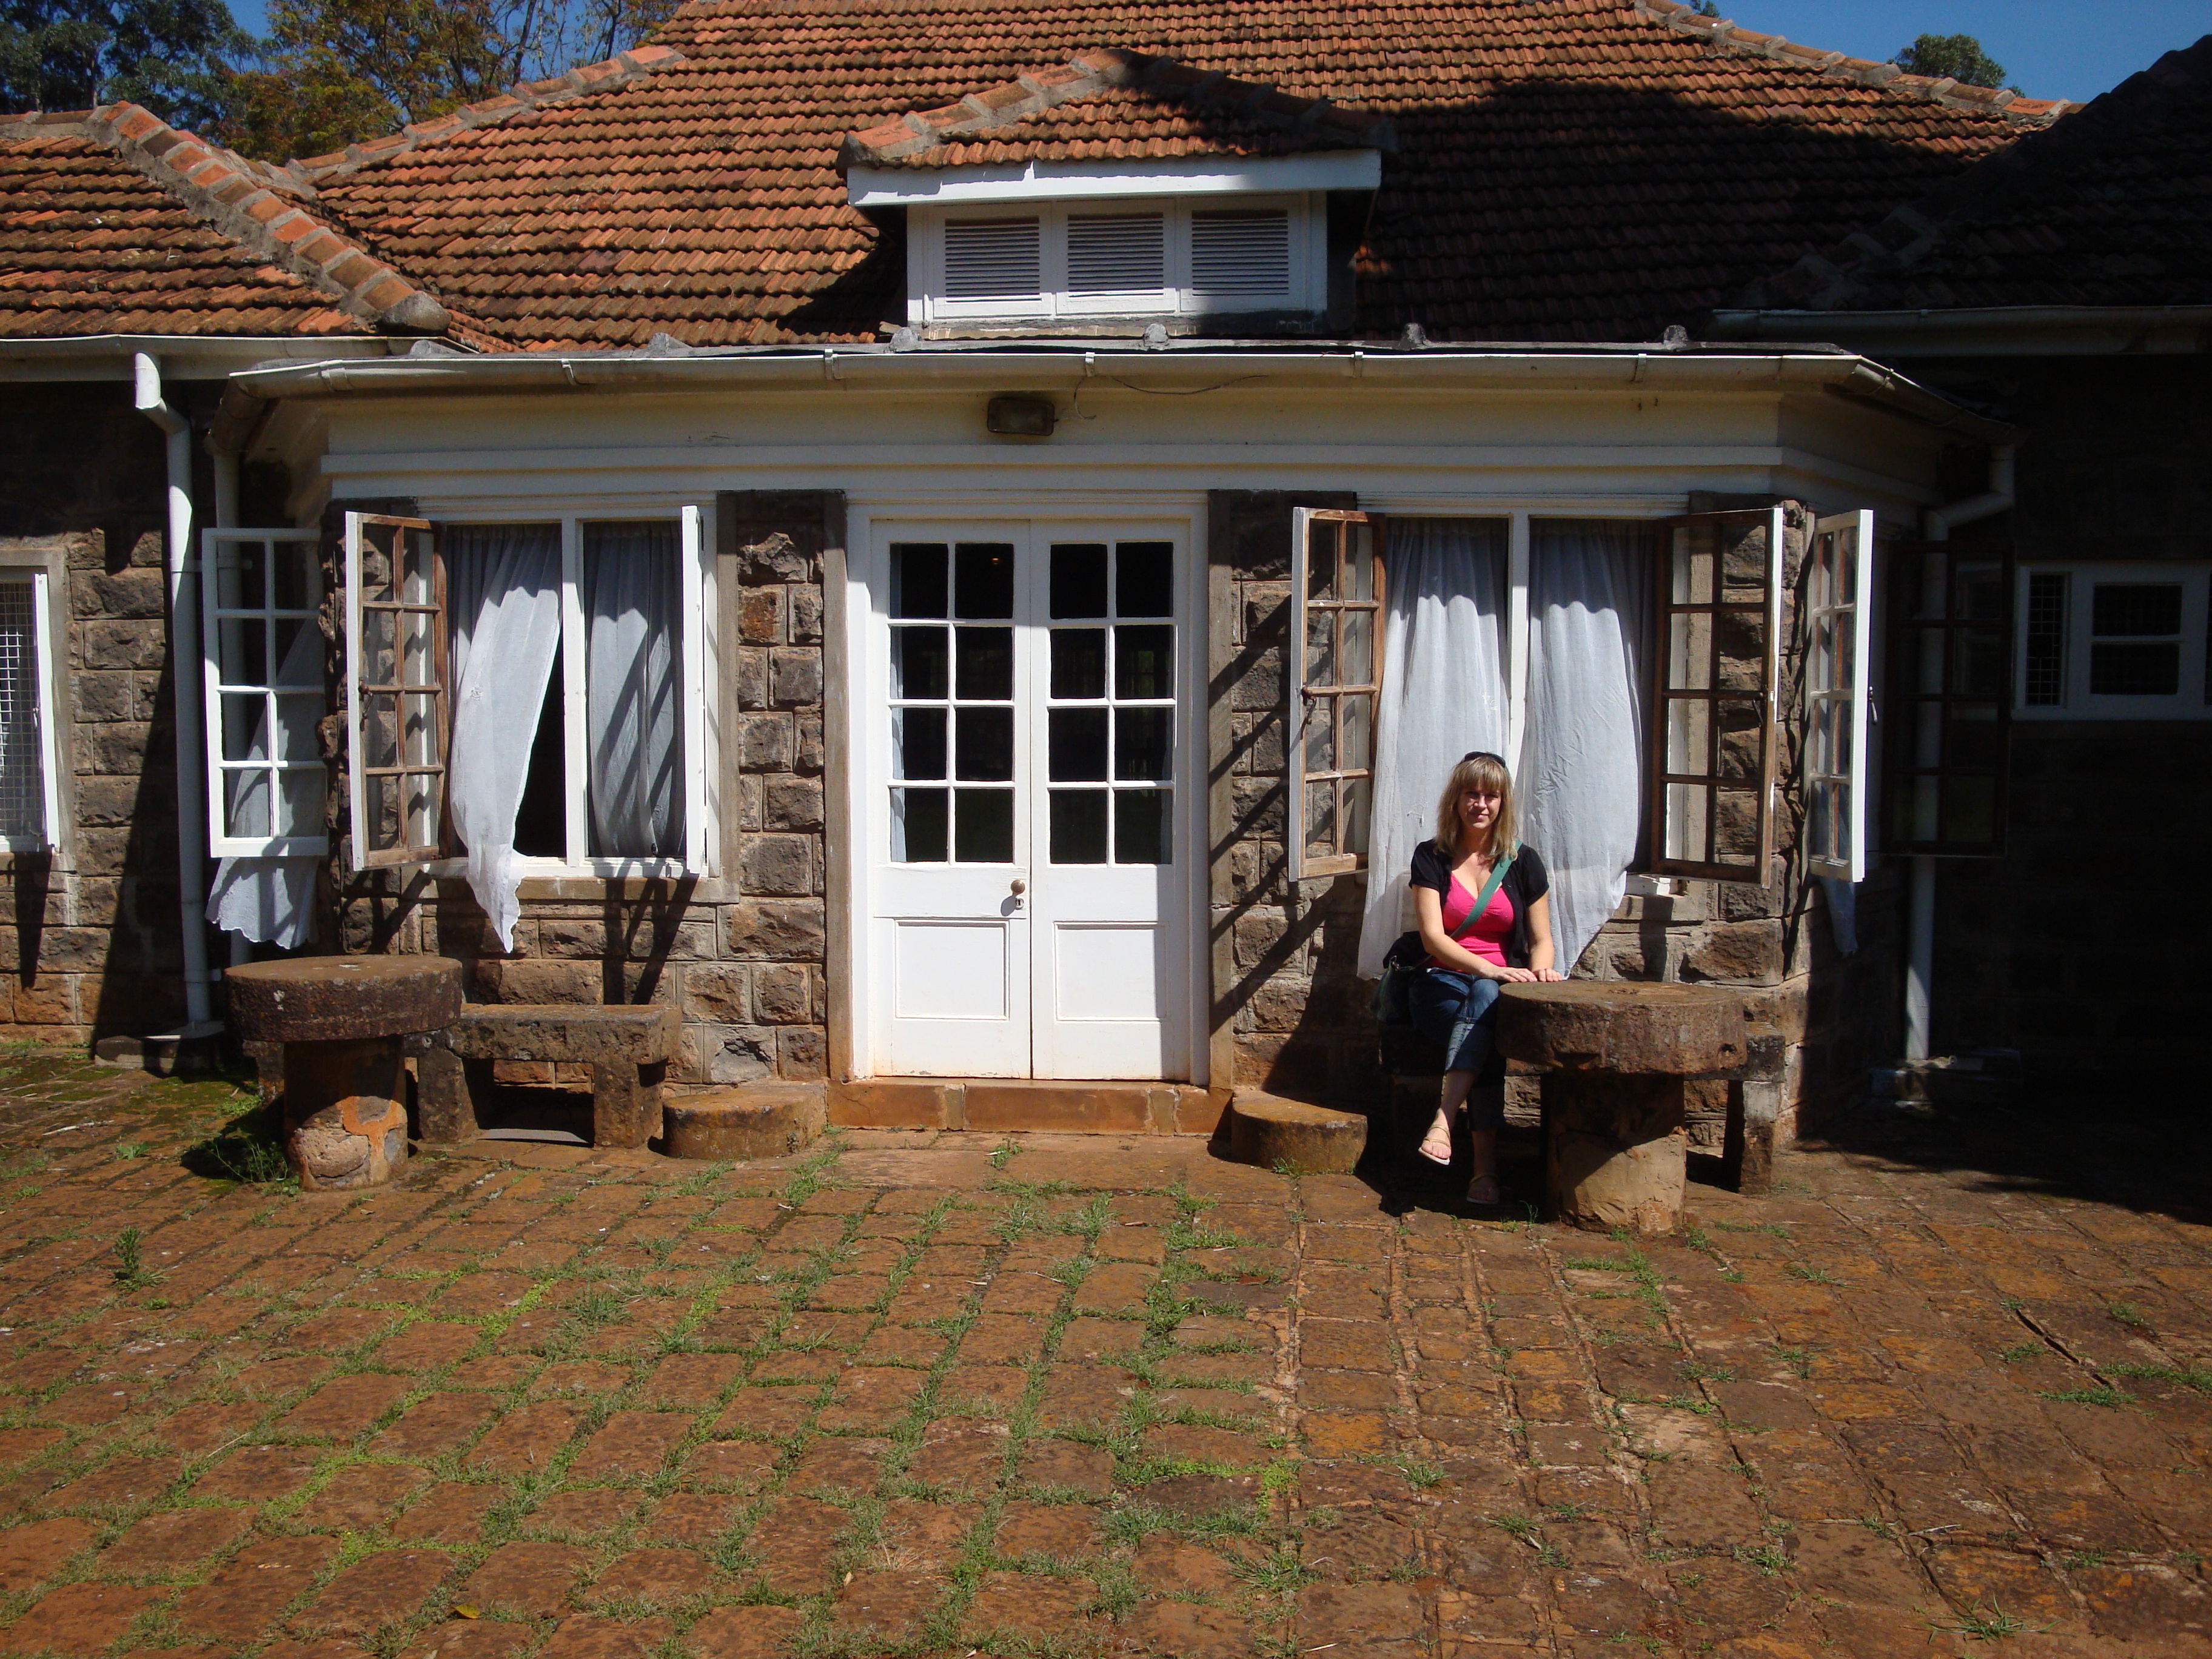 Wo Karen Blixen einst die Kikuyu versorgt hat: Blixen House Museum in Nairobi, Kenia